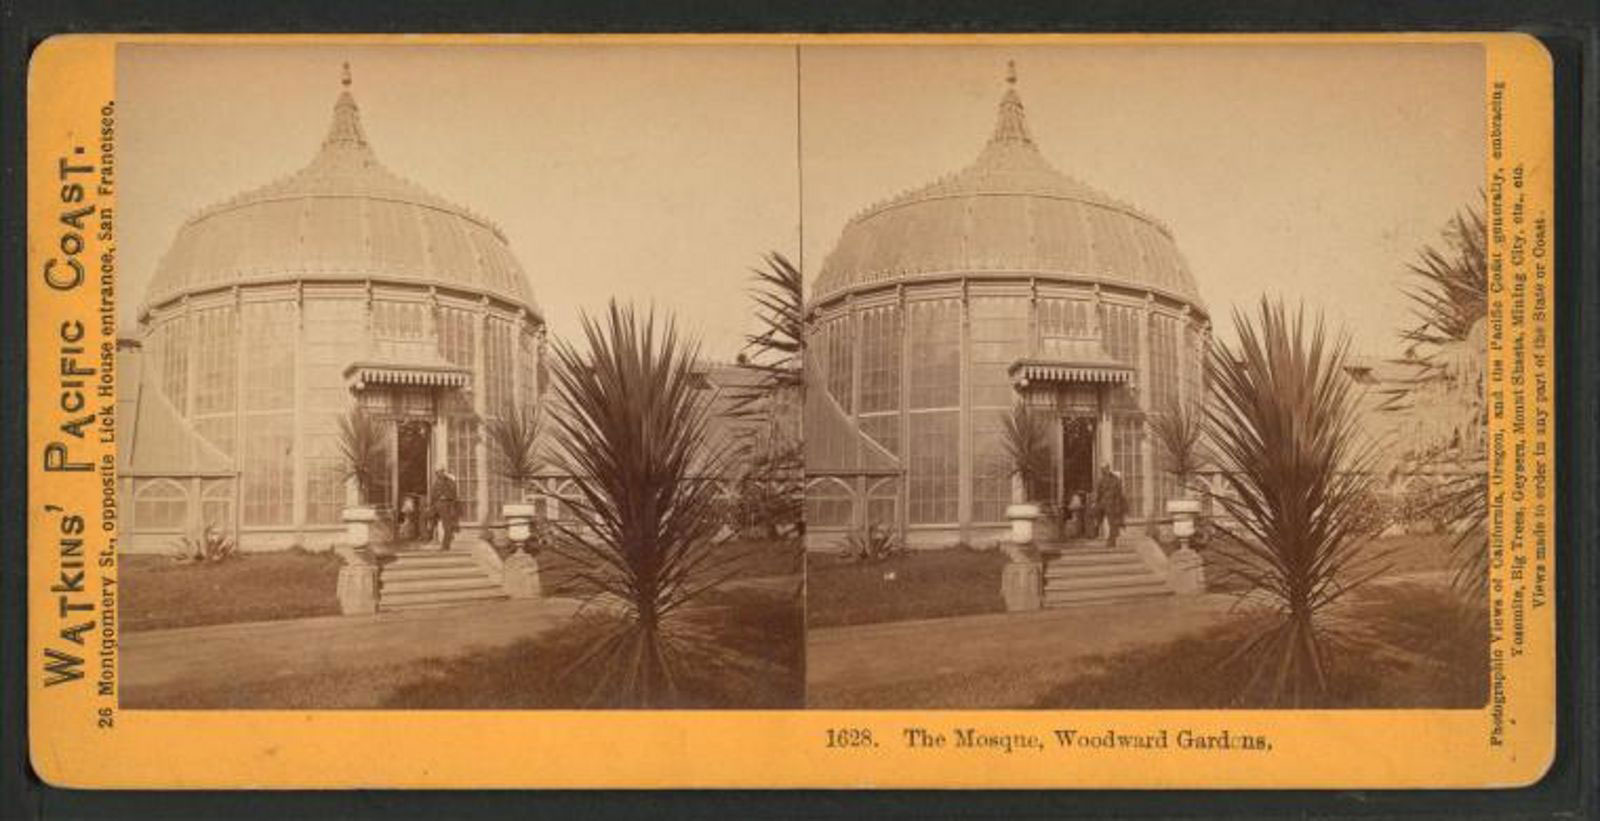 Watkins #1628 - The Mosque, Woodward Gardens